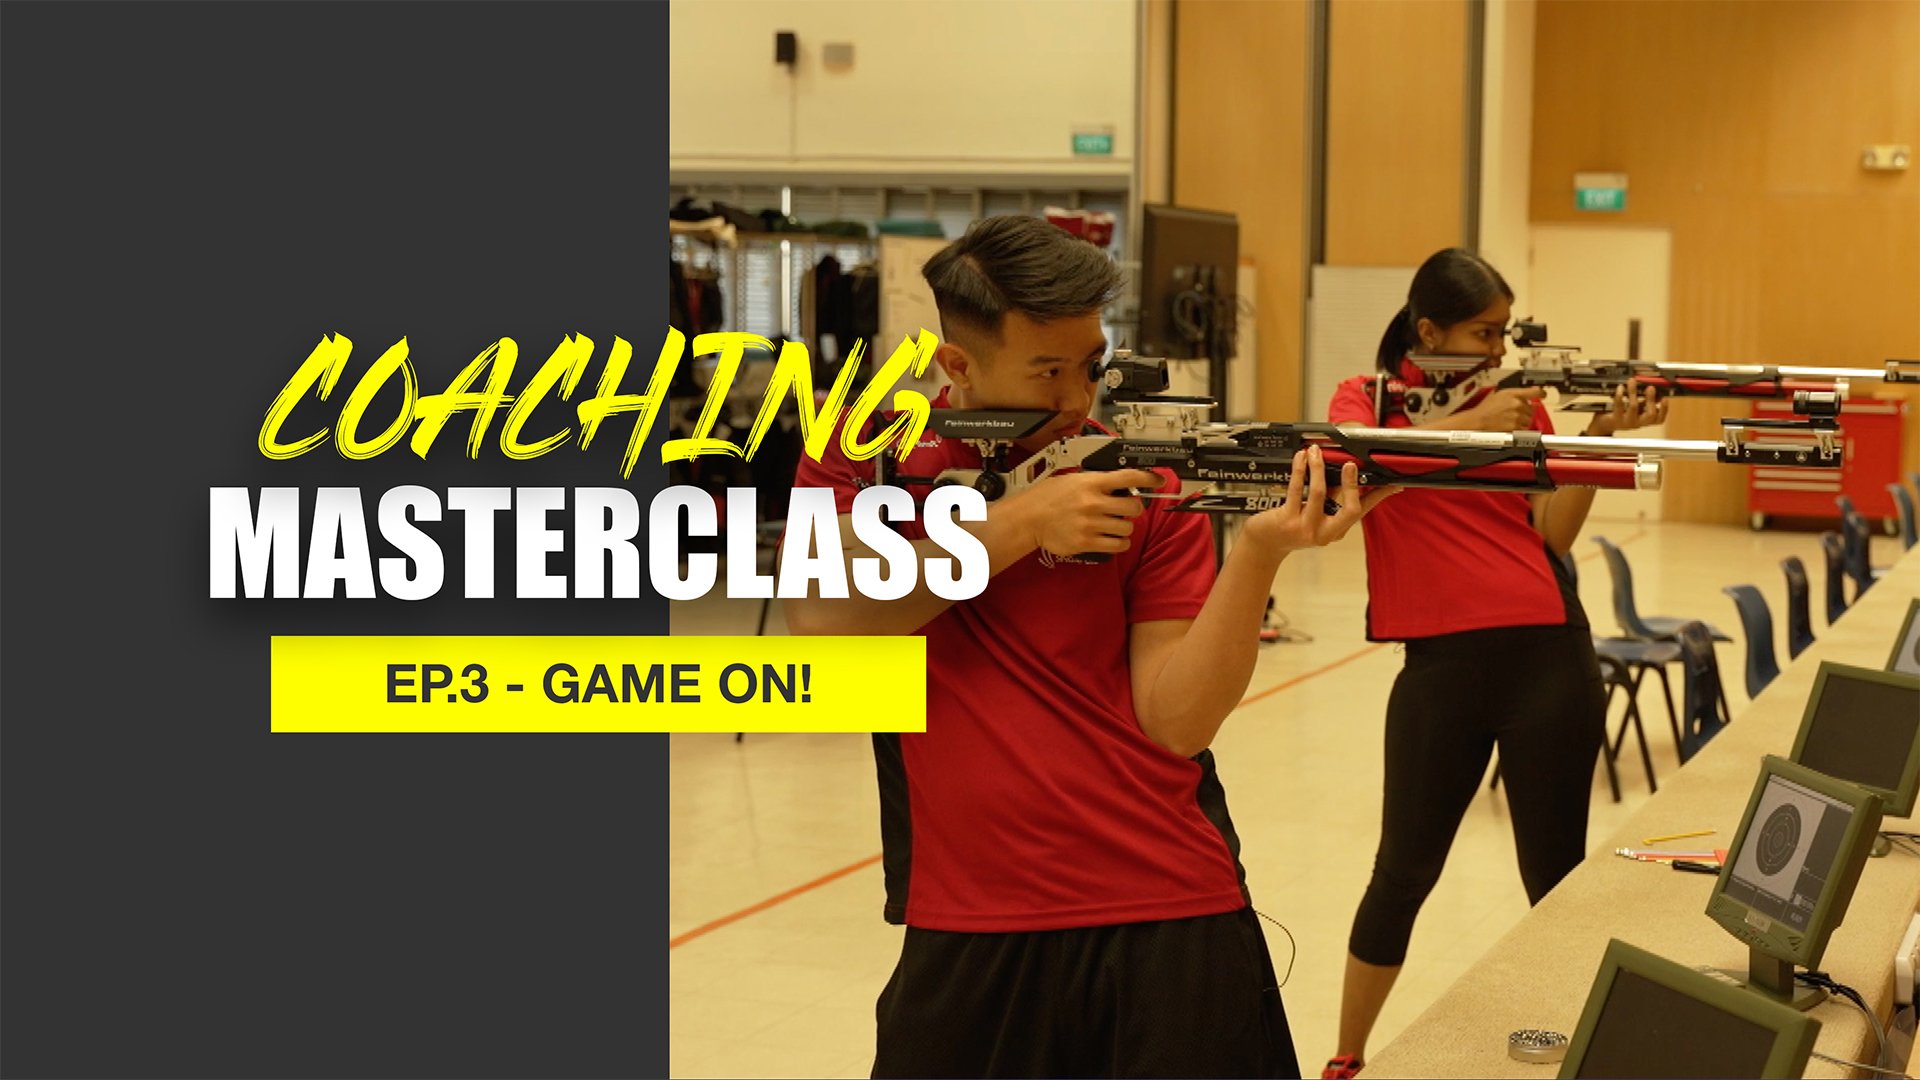 Coaching Masterclass (Shooting) Ep 3 - Game On!